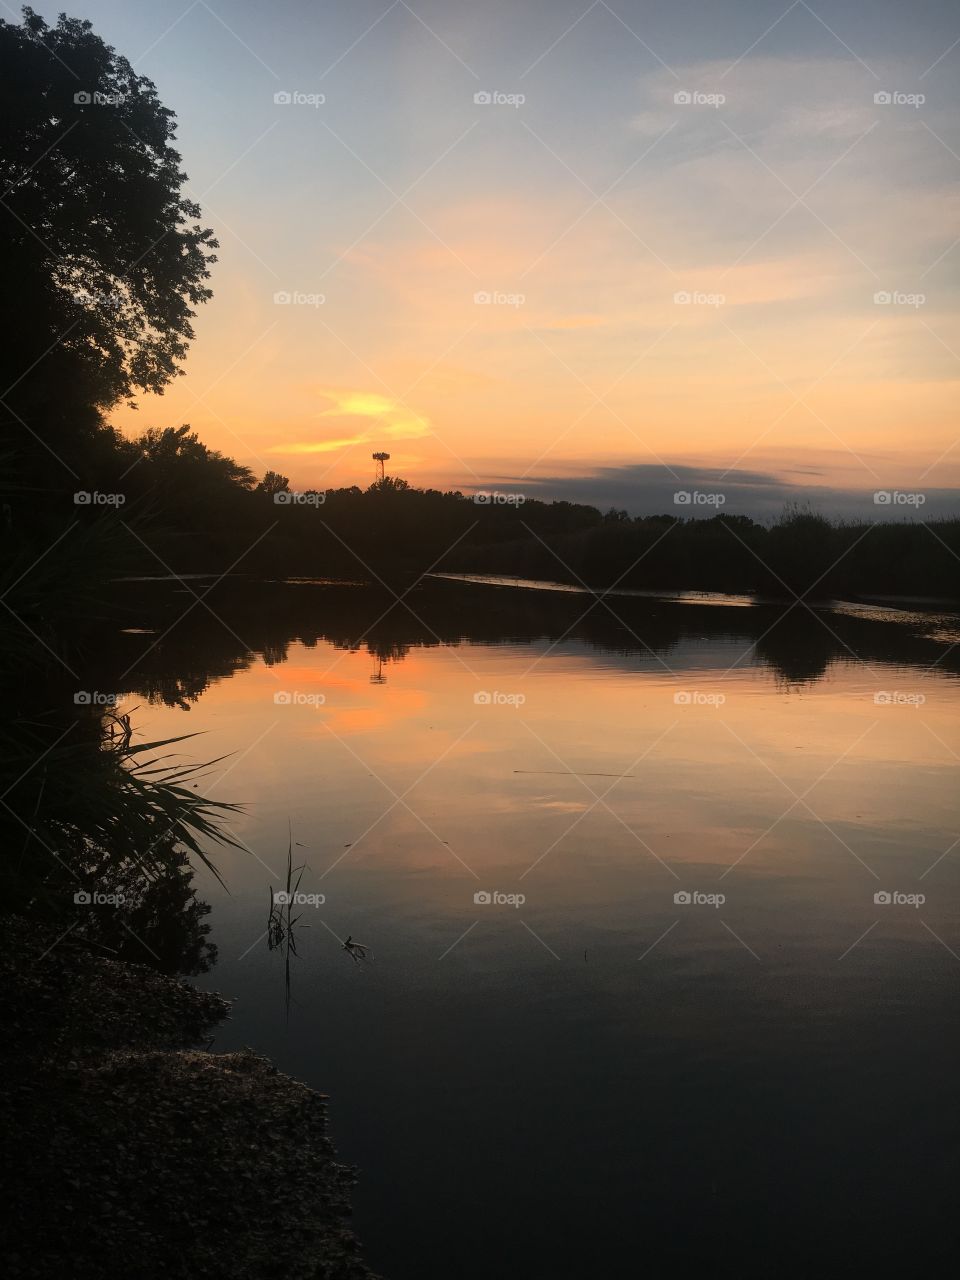 Sunset, Water, Lake, Dawn, Reflection